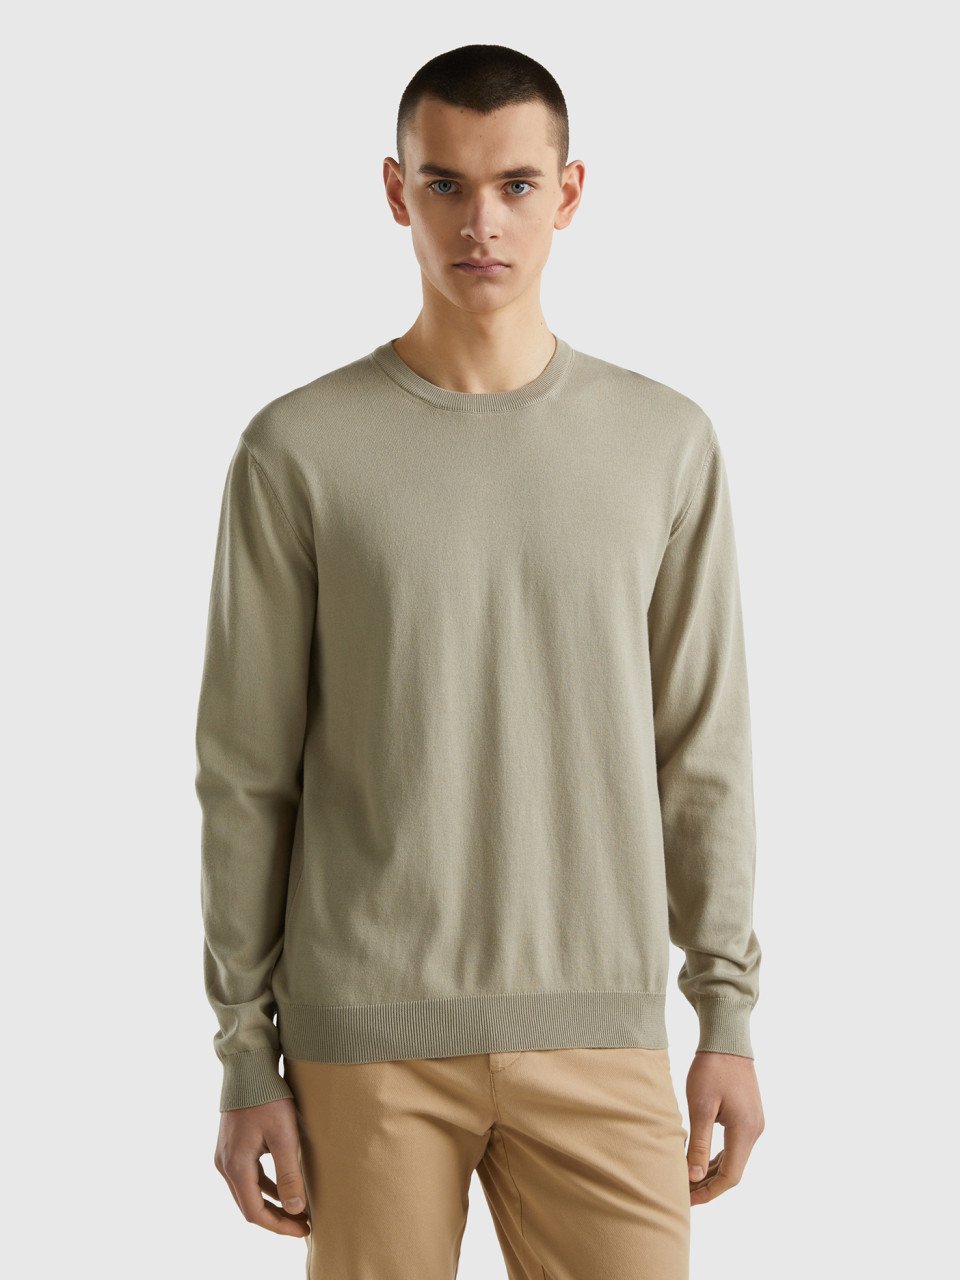 Benetton, Crew Neck Sweater In 100% Cotton, Light Green, Men